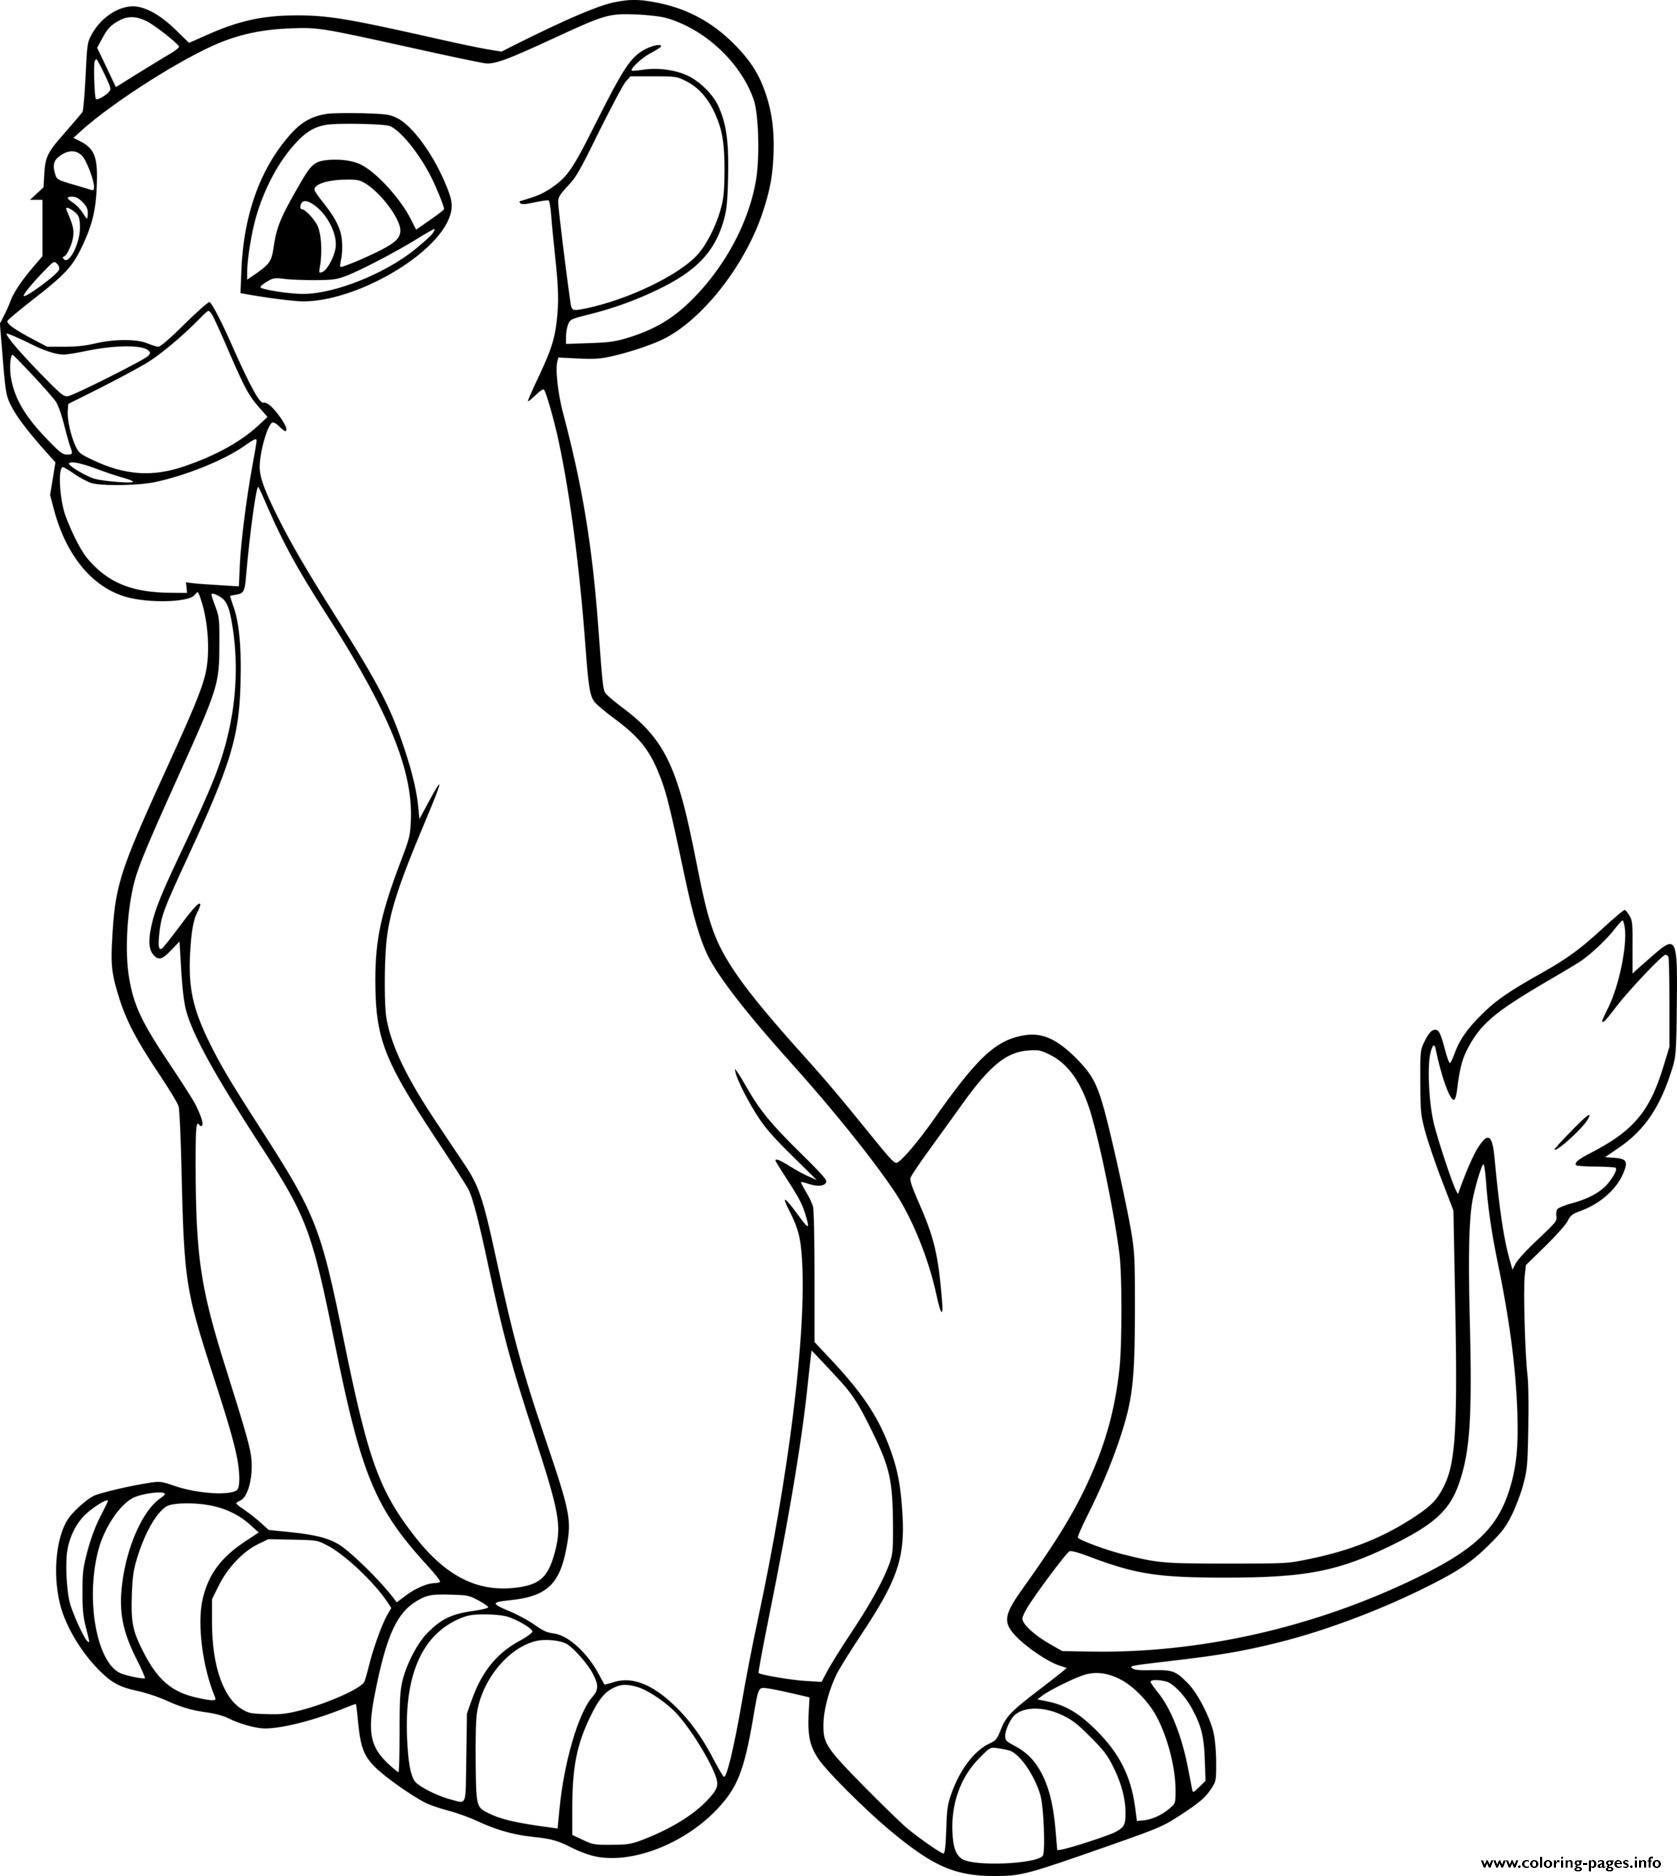 Nala Lion coloring